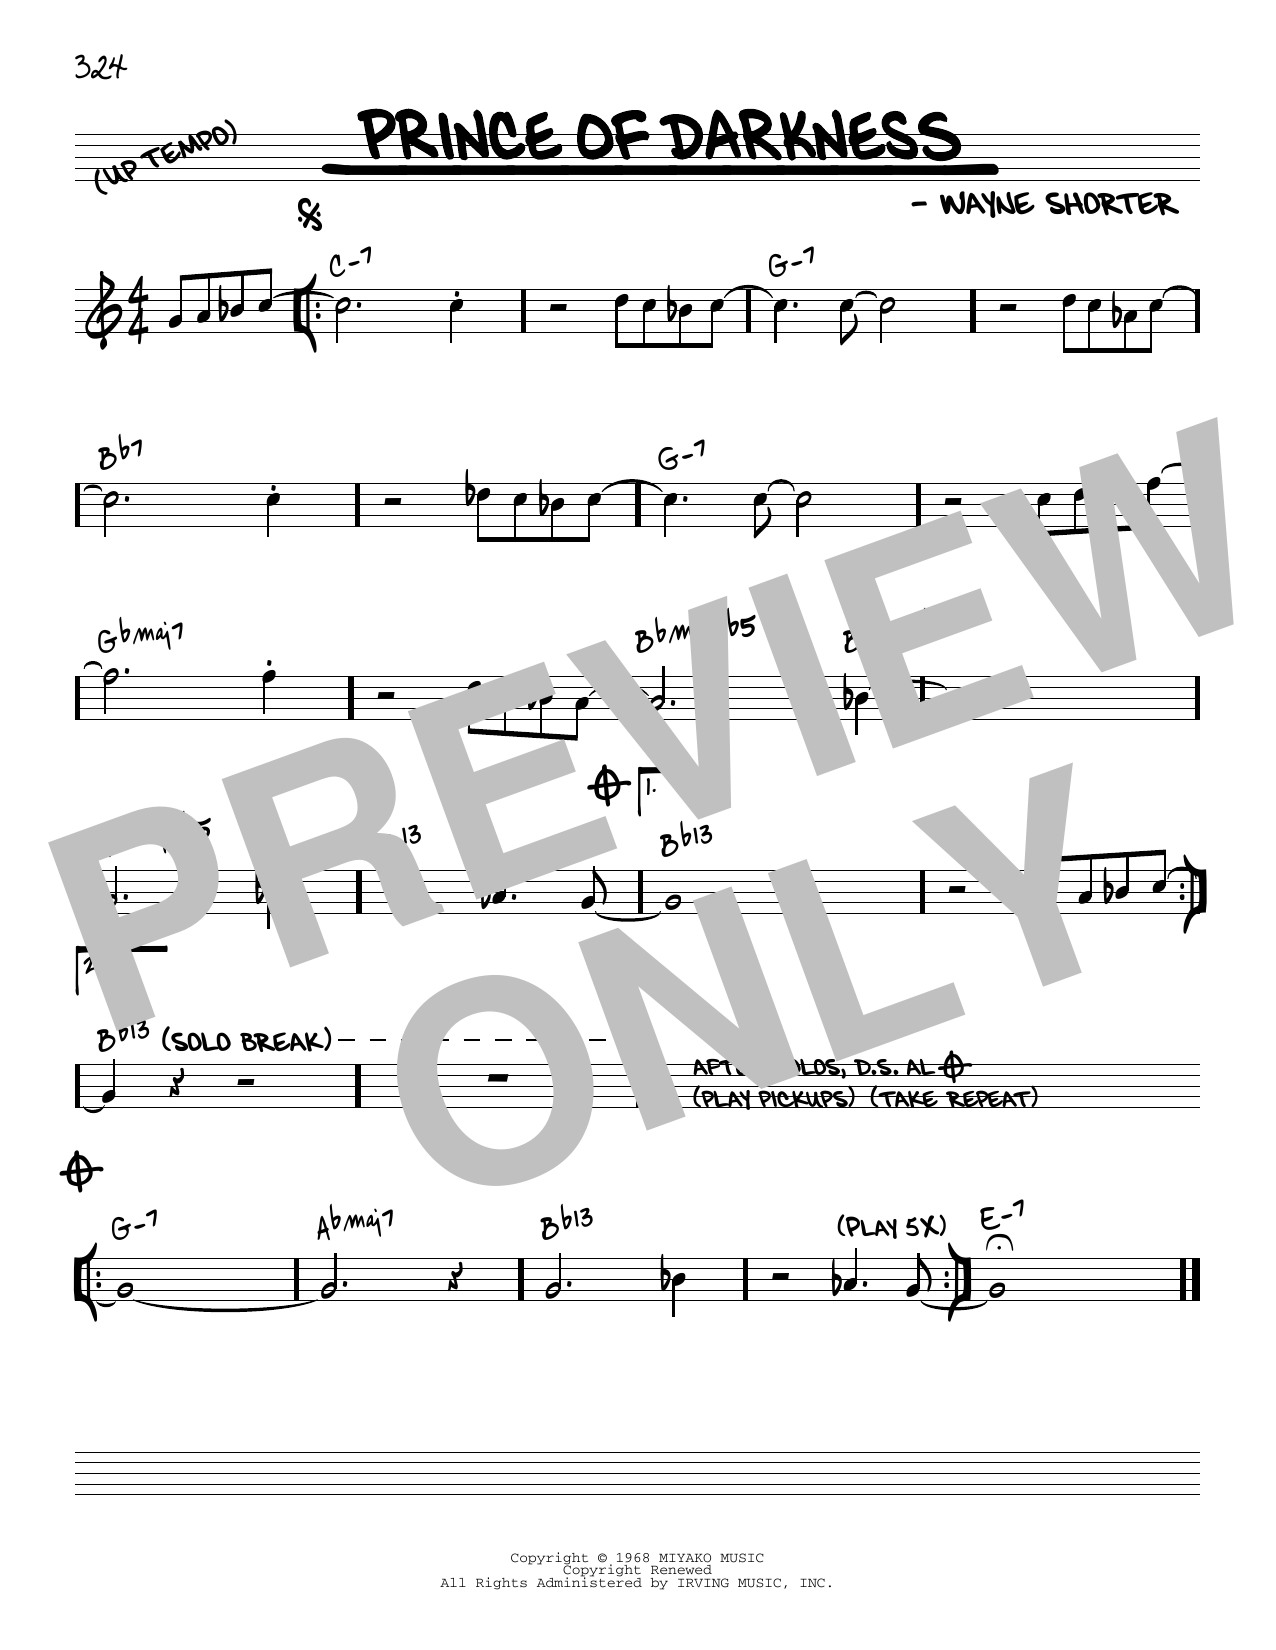 Download Wayne Shorter Prince Of Darkness [Reharmonized versio Sheet Music